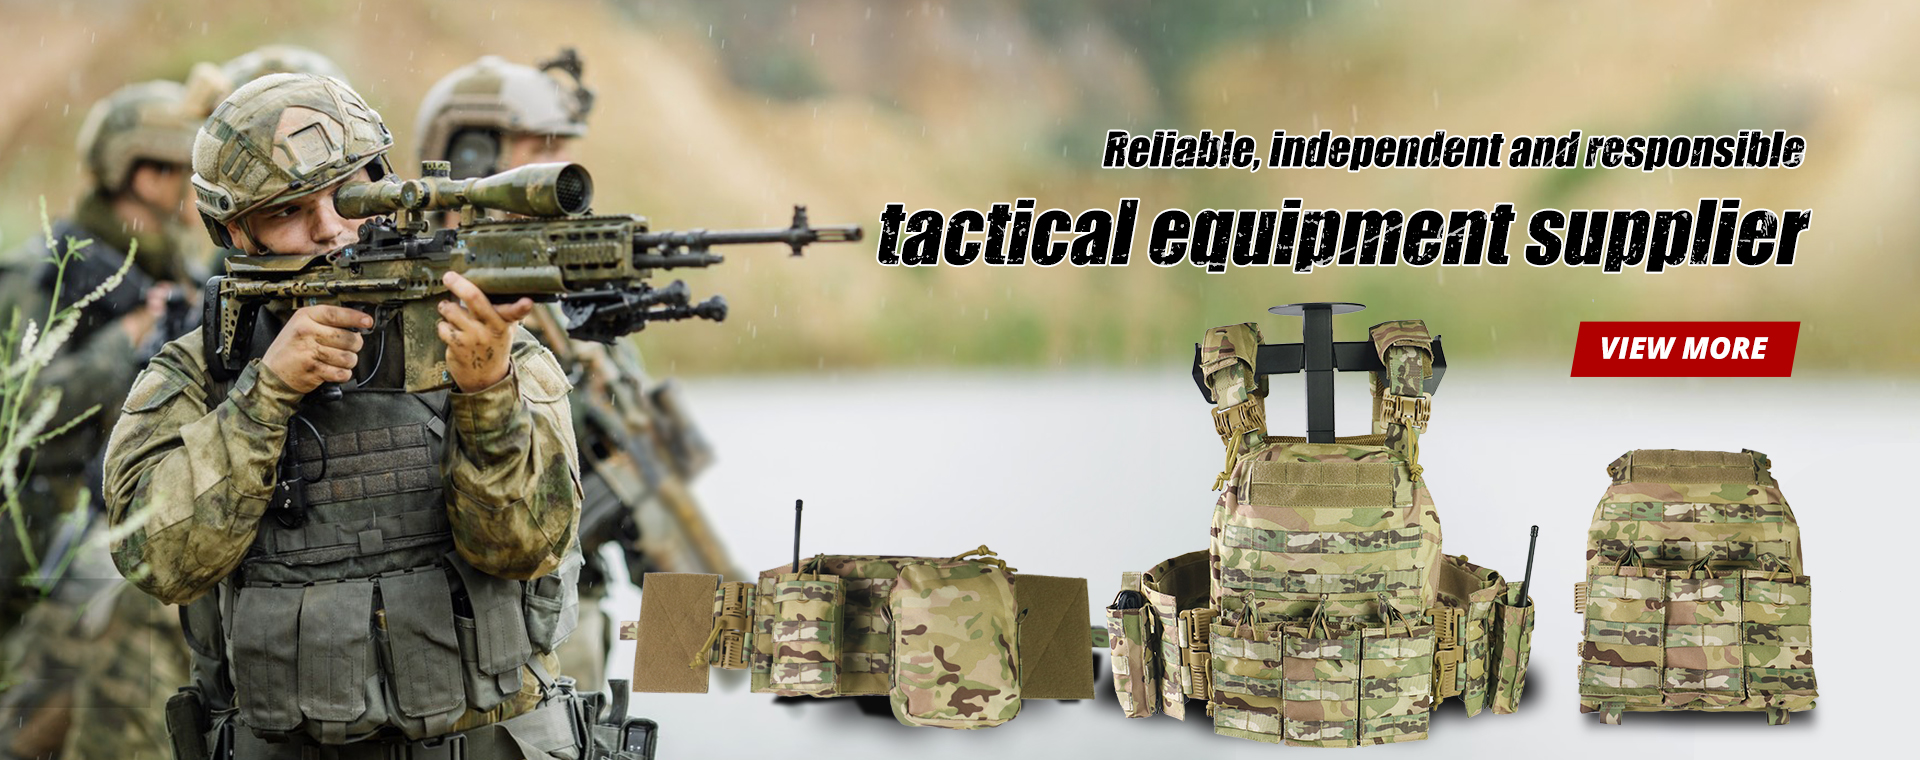 tactical vest, Bullet proof vest, tactical bag, Tactical boot manufacturer